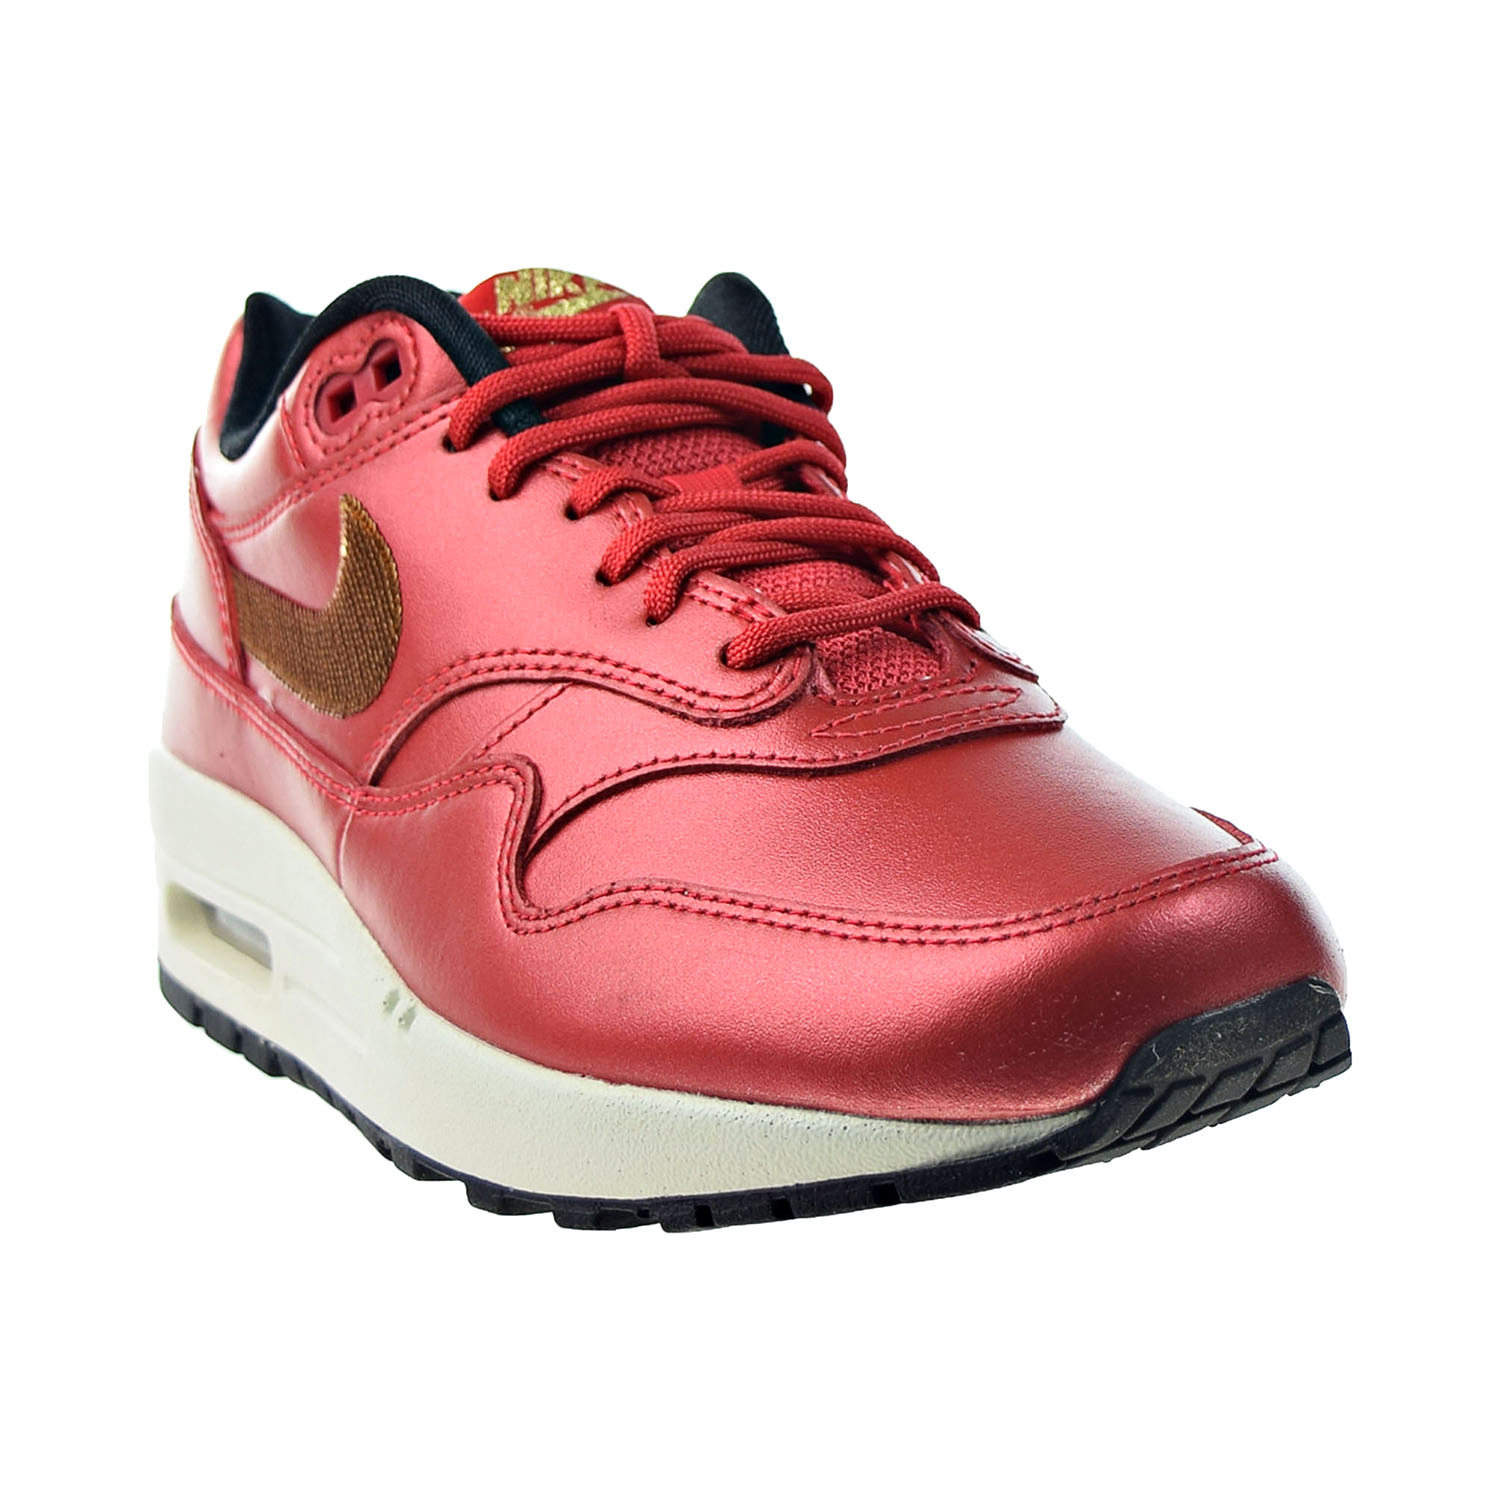 Nike Air Max 1 Women's Shoes University Red-Metallic Gold ct1149-600 - image 2 of 6